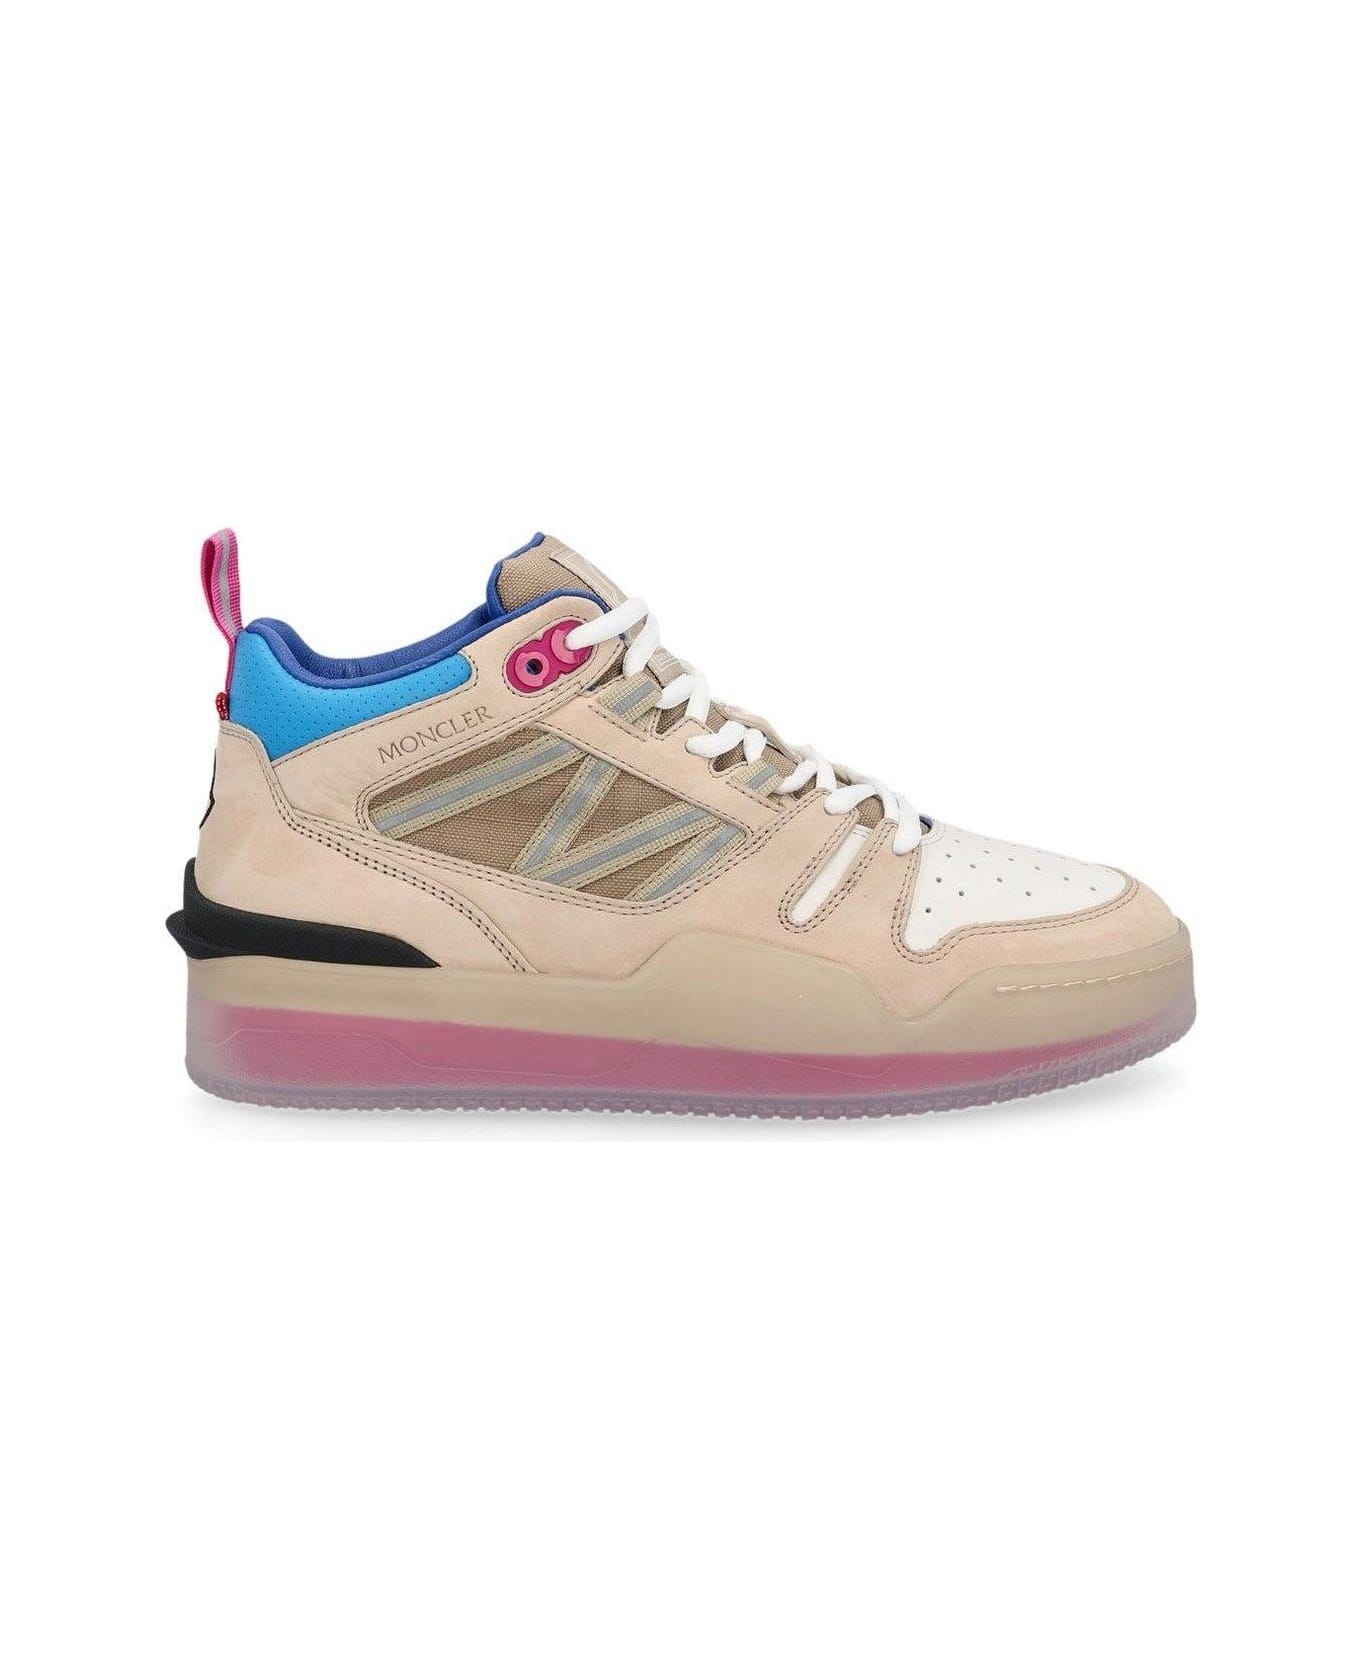 Moncler Pivot High Top Sneakers - Pink スニーカー